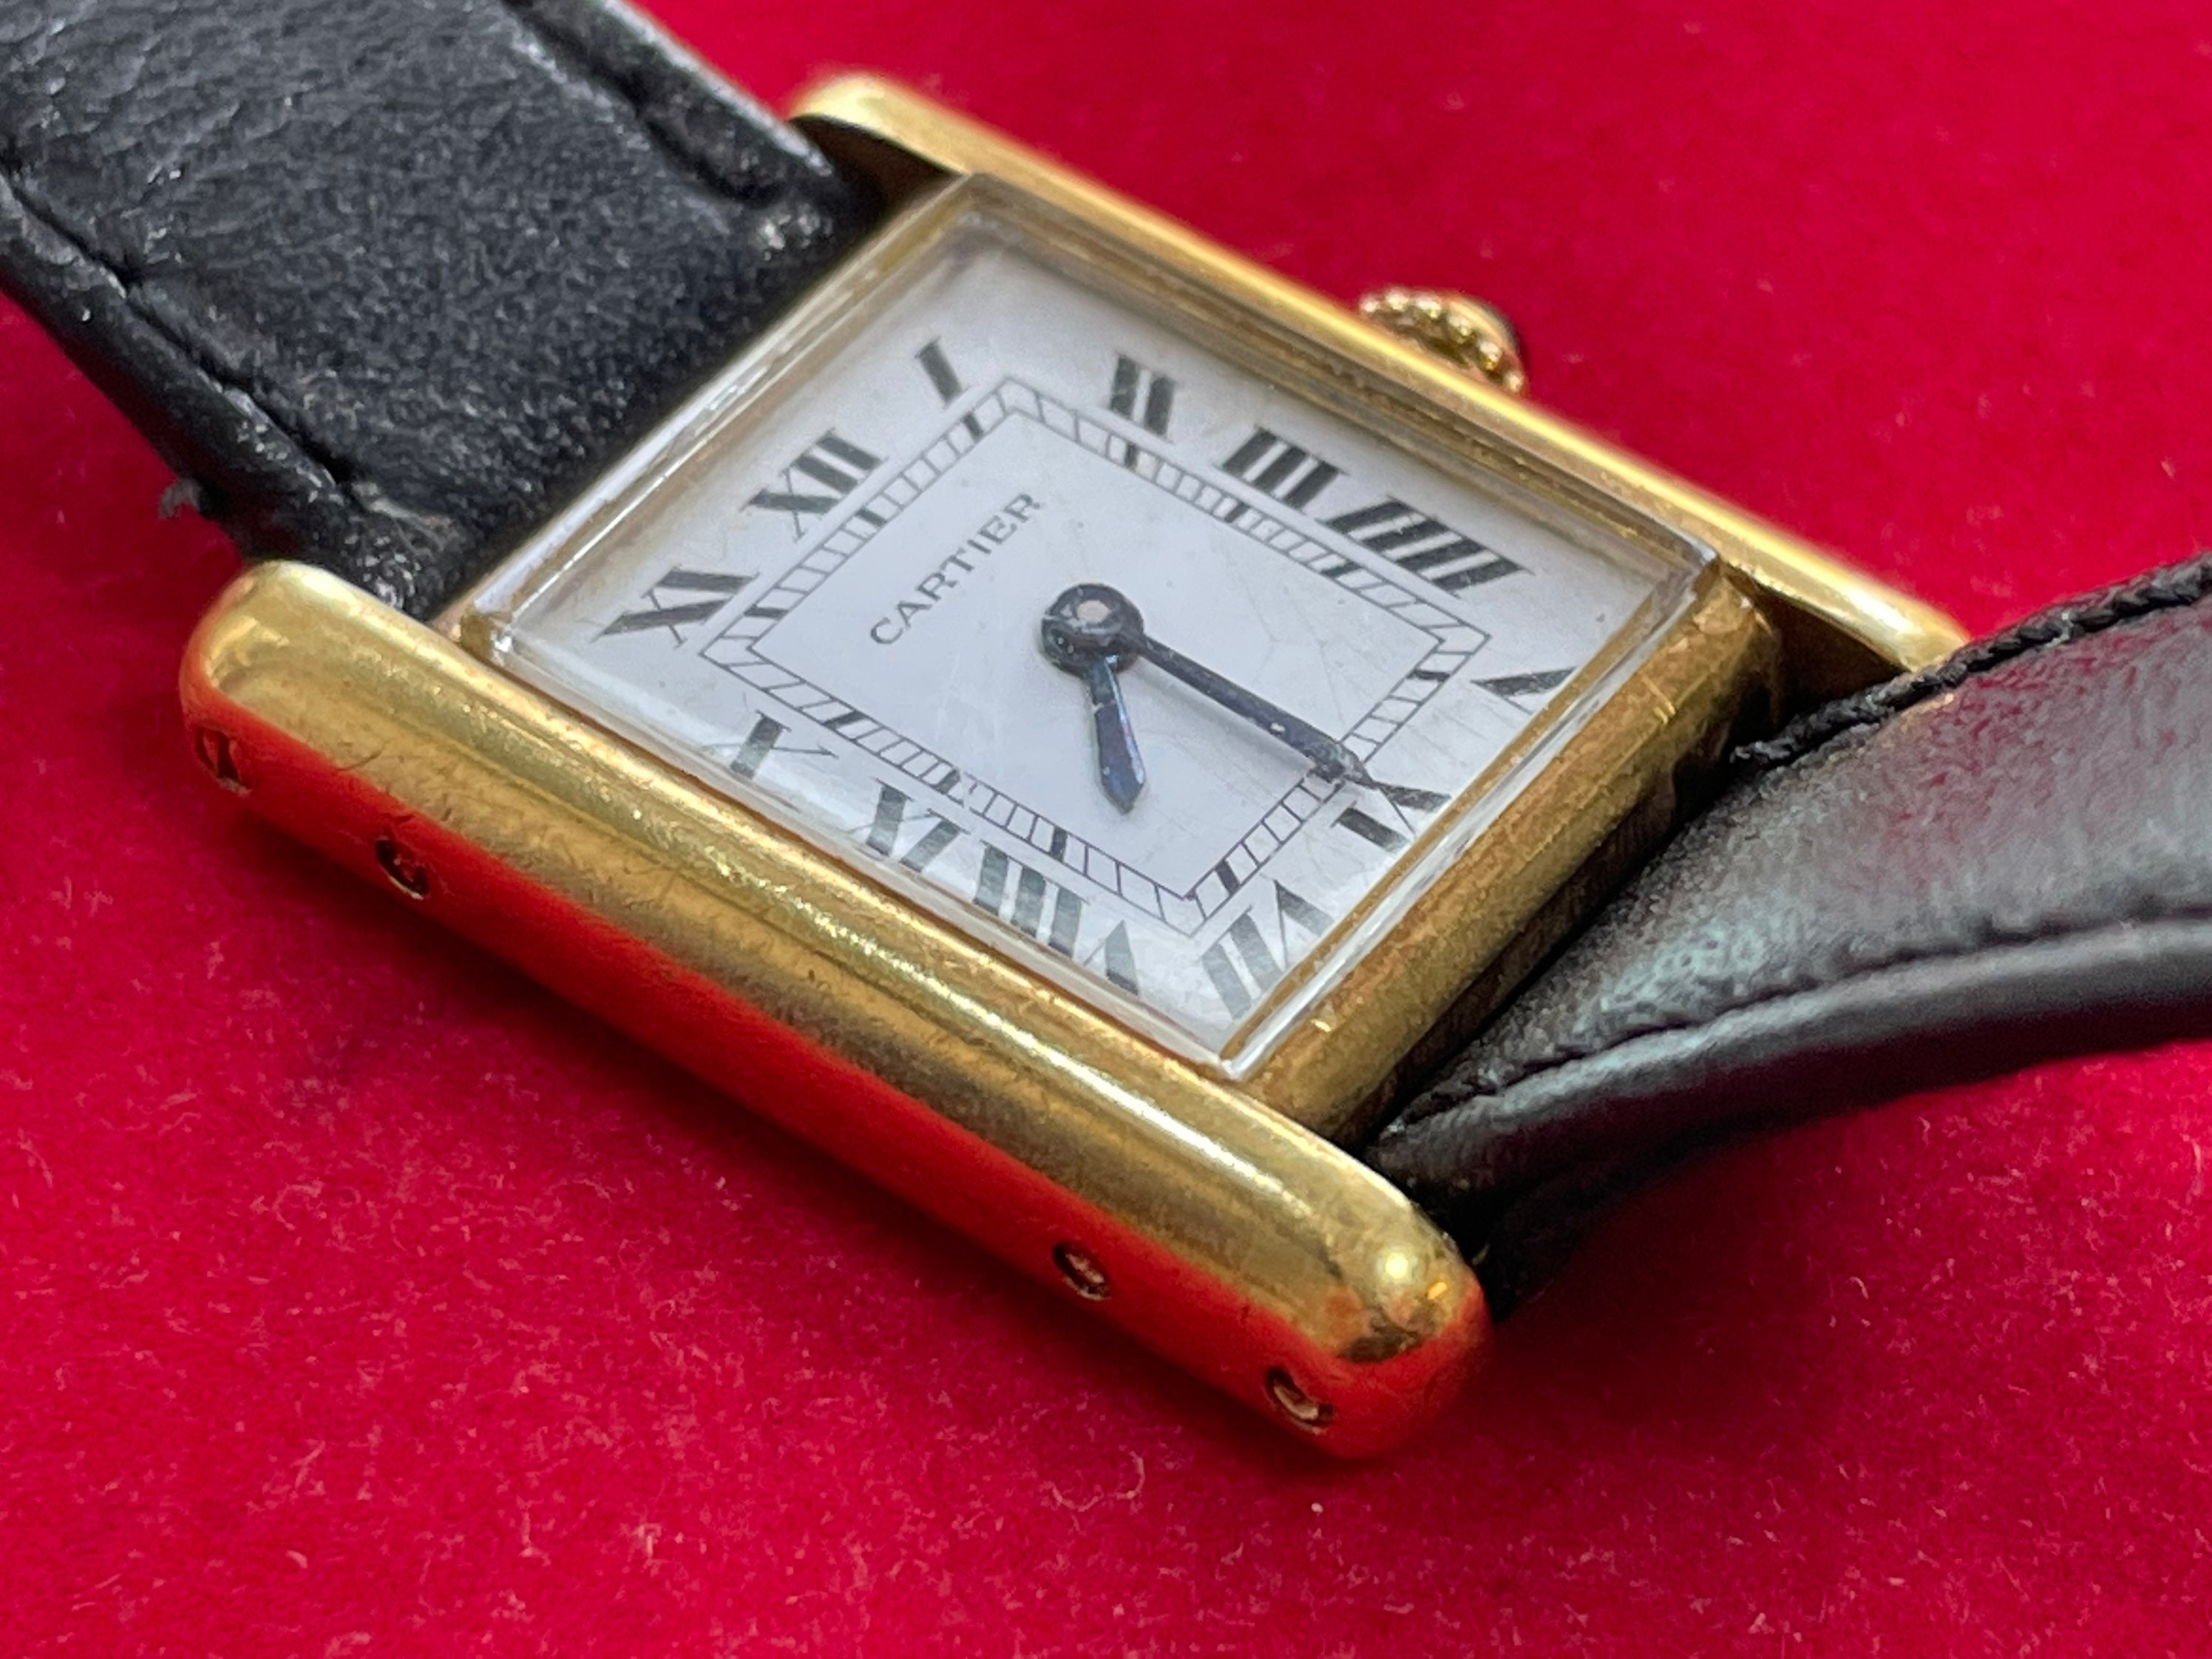 SOLD Vintage Cartier Tank Louis 20mm 18K Watch